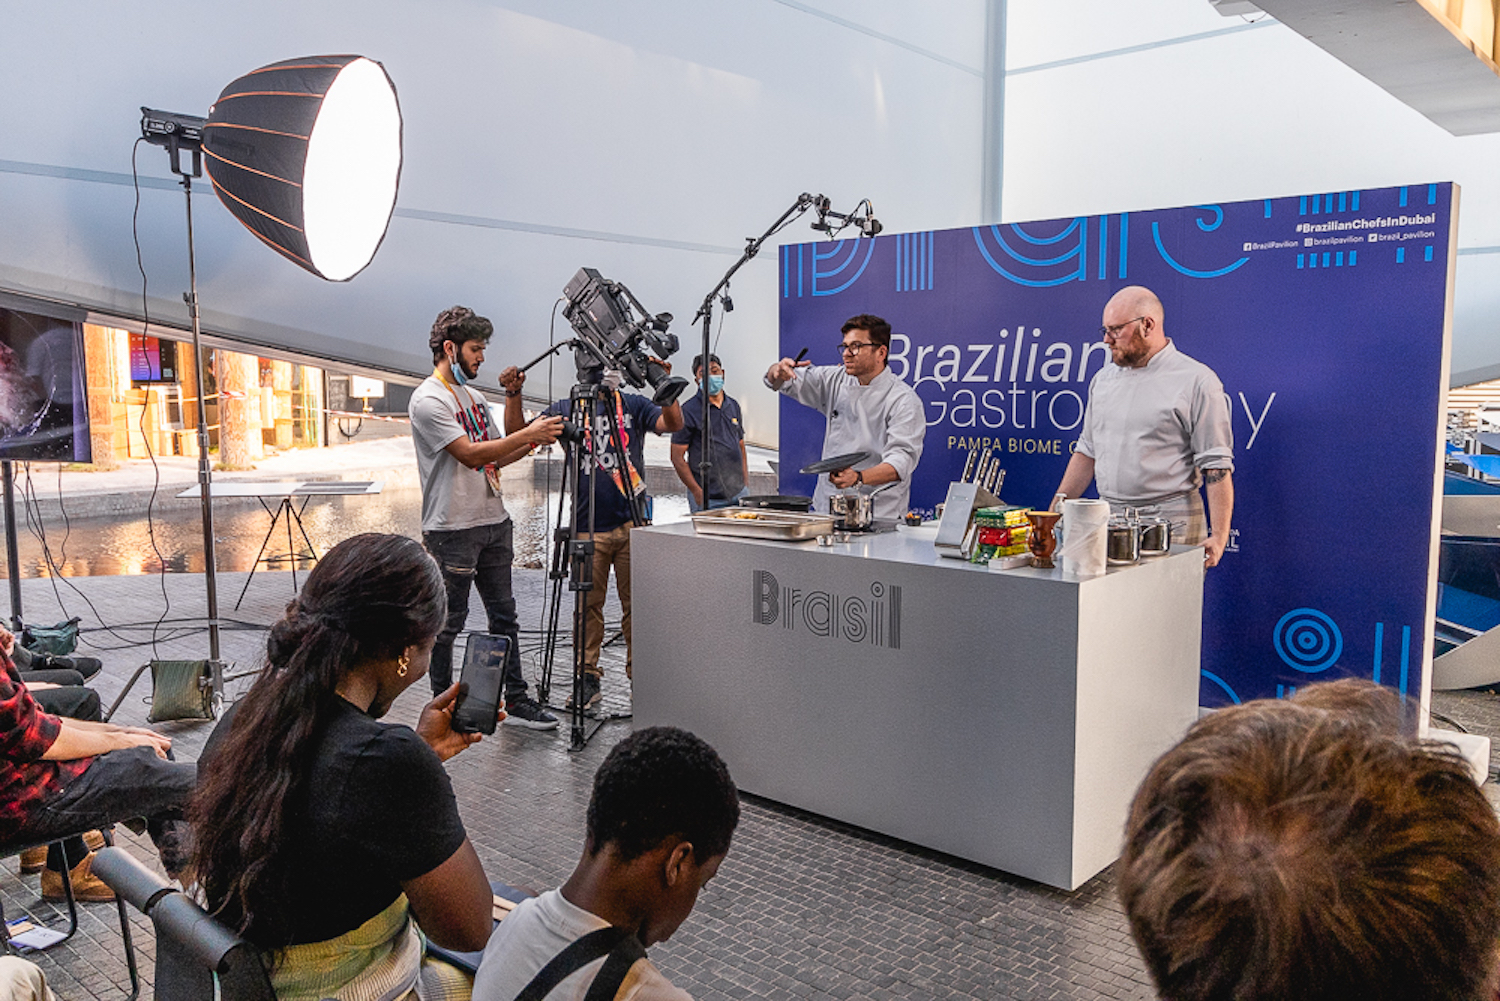 EXPO DUBAI 2020 – Show Cookings Brazilian Pavilion